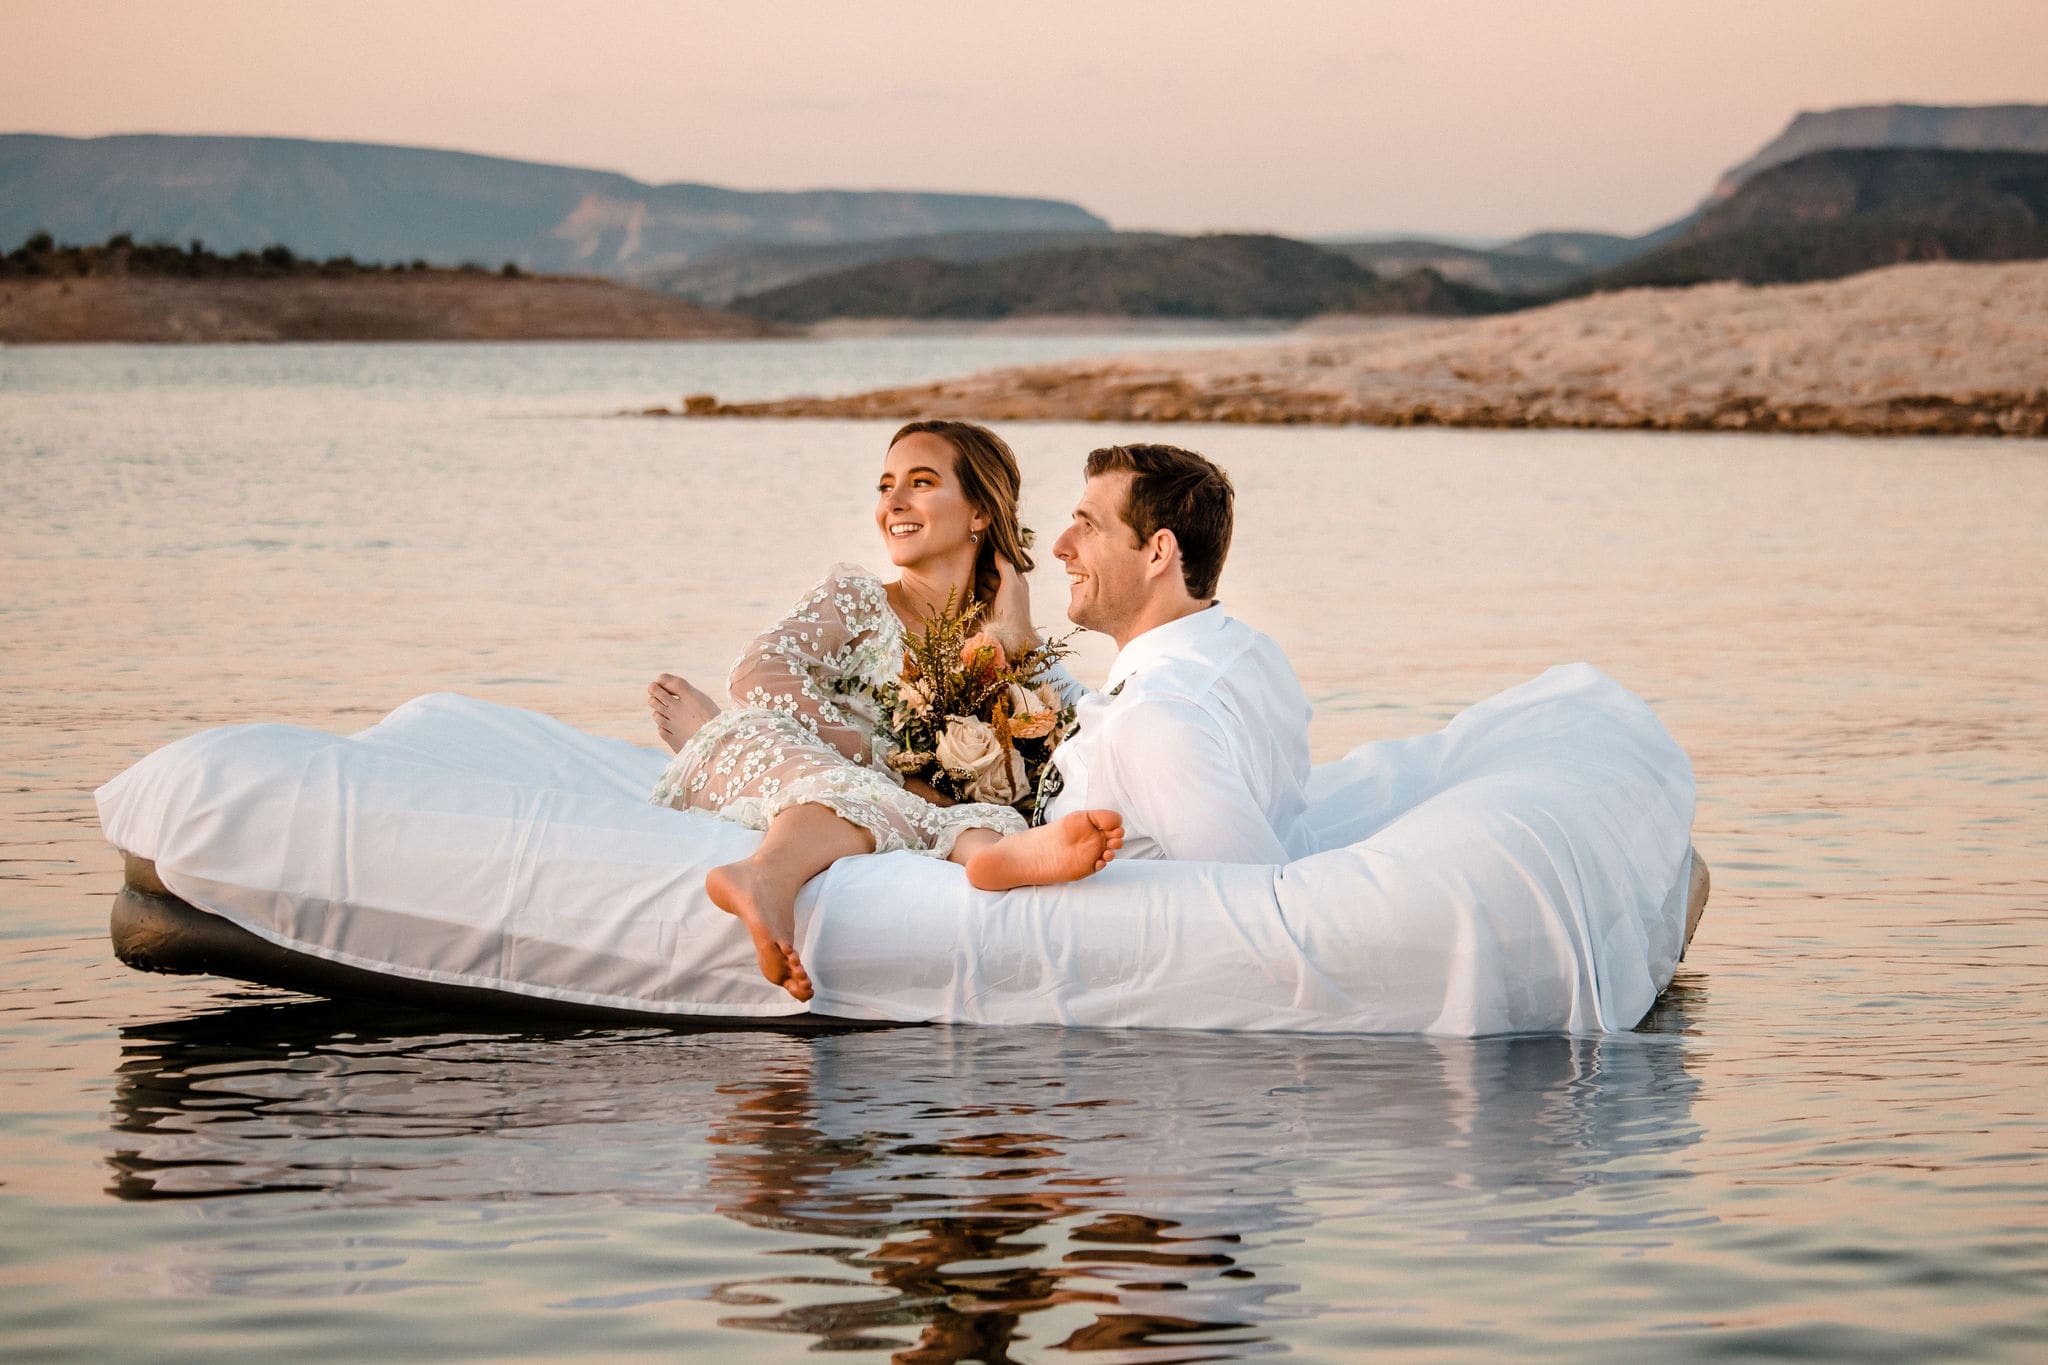 couple floats on air mattress as lakeside elopement ideas